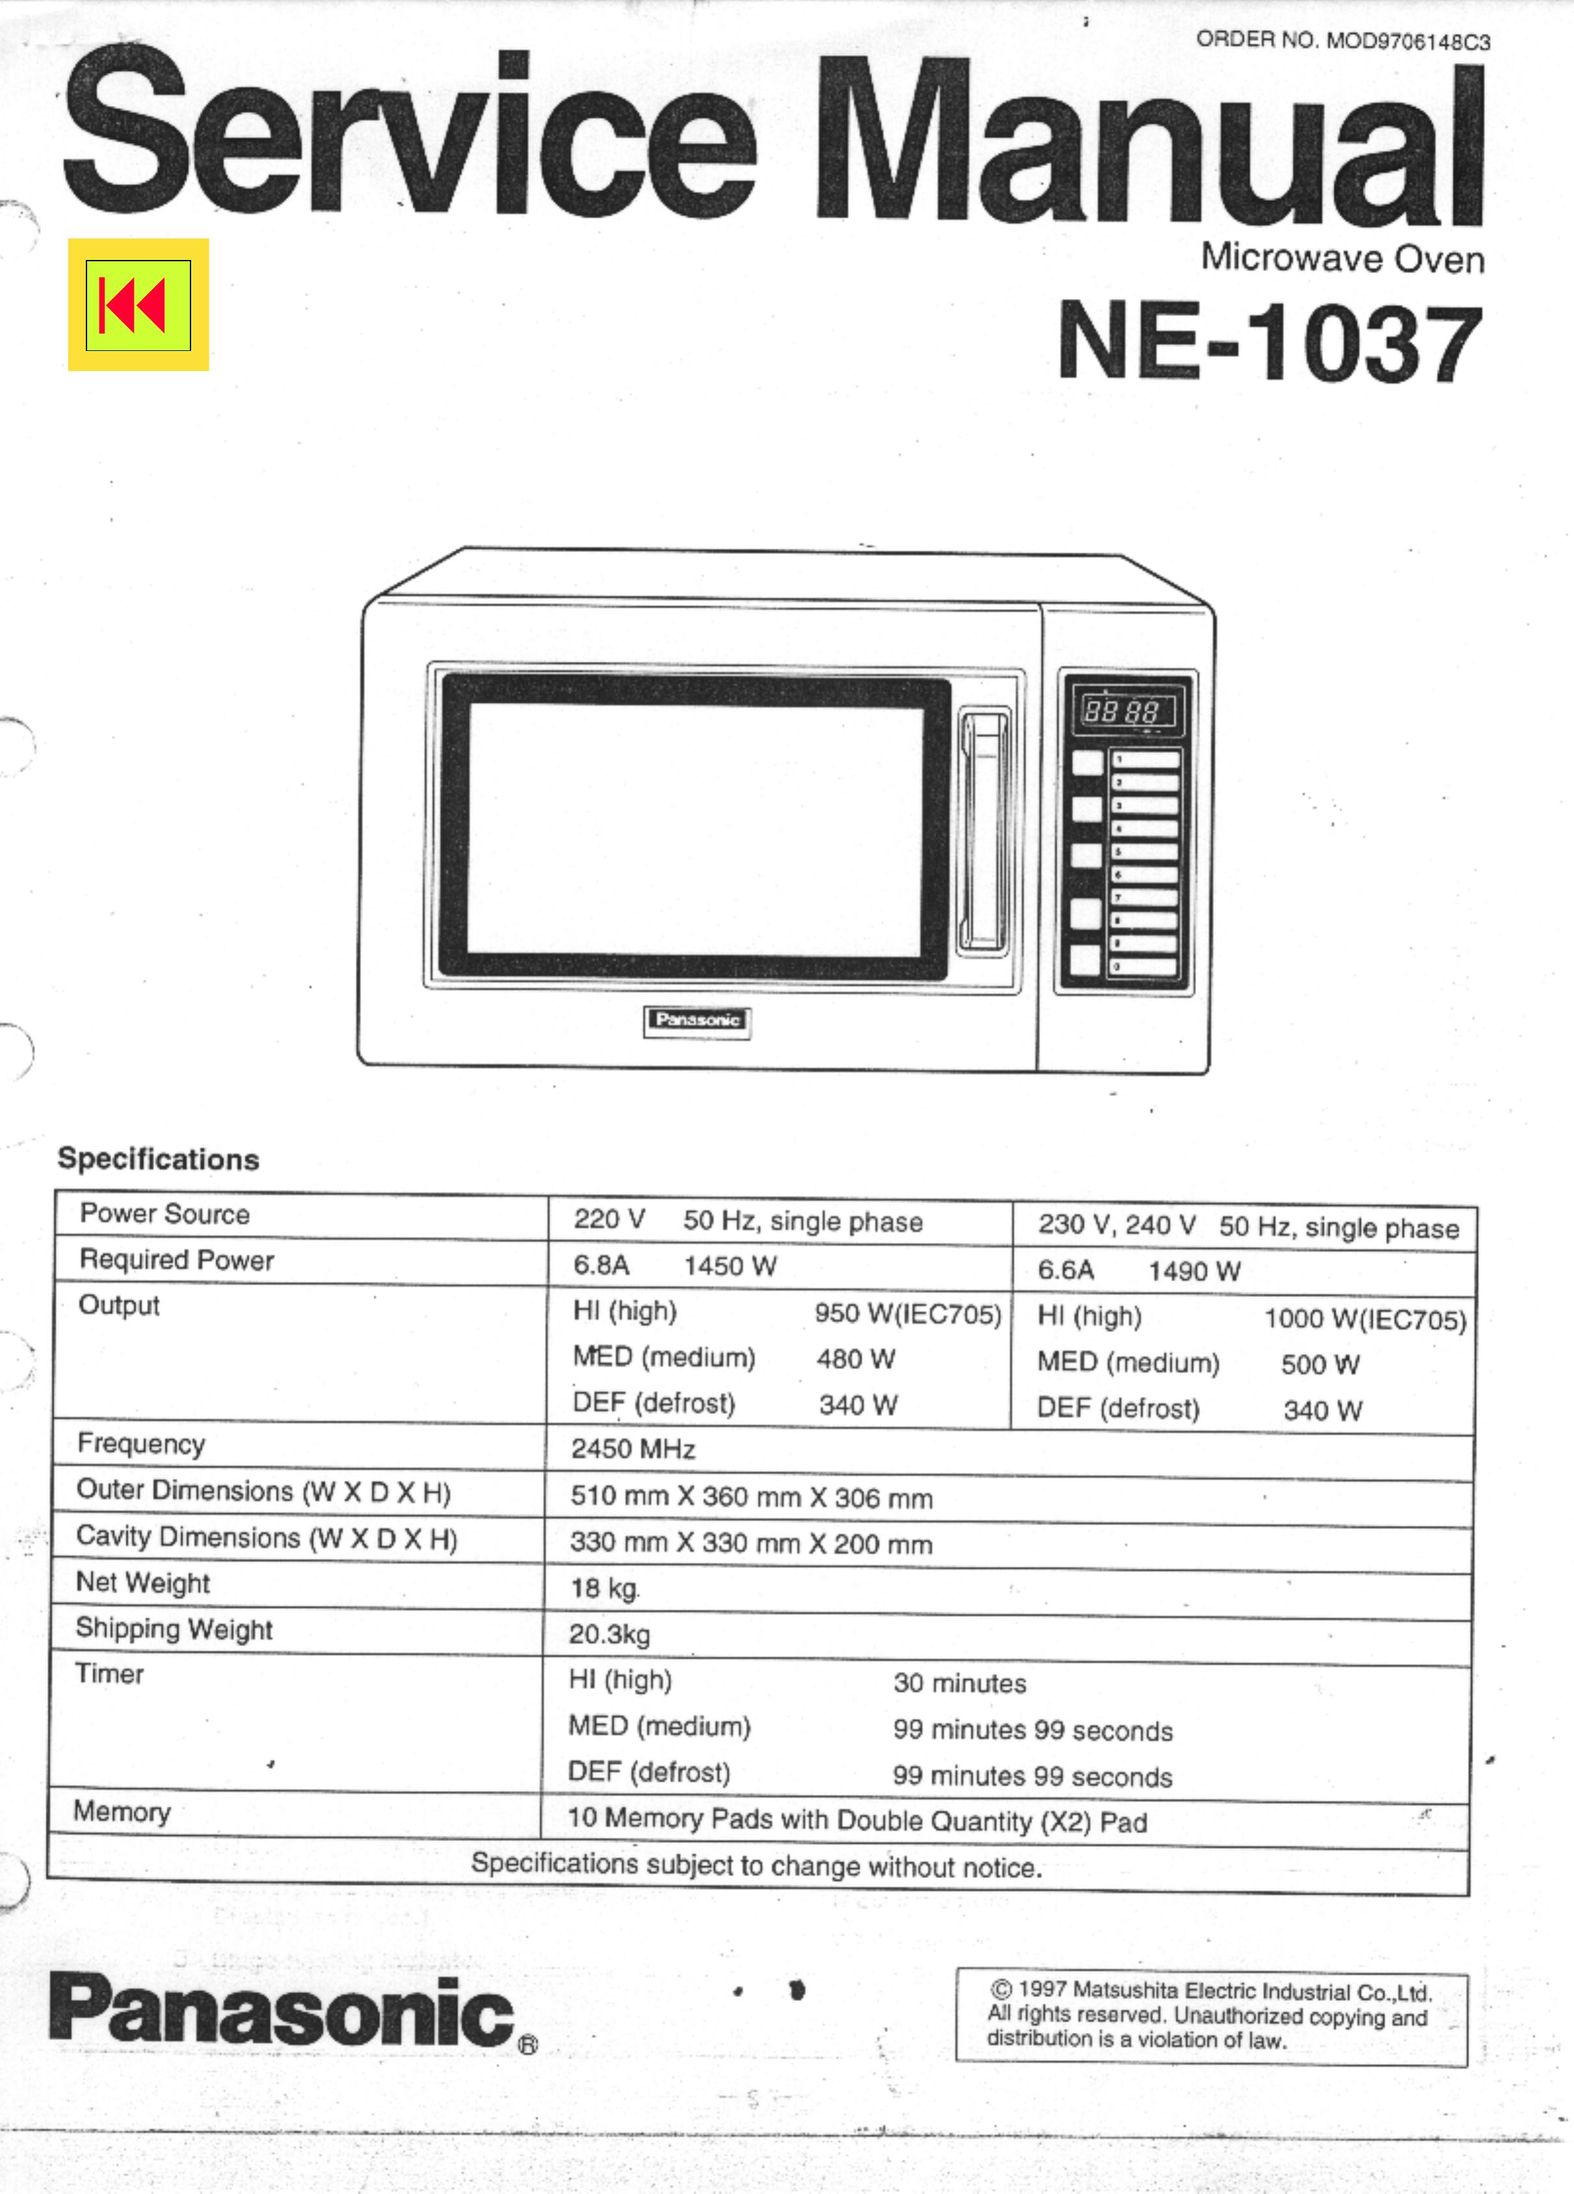 Panasonic NE-1037 Microwave Oven User Manual